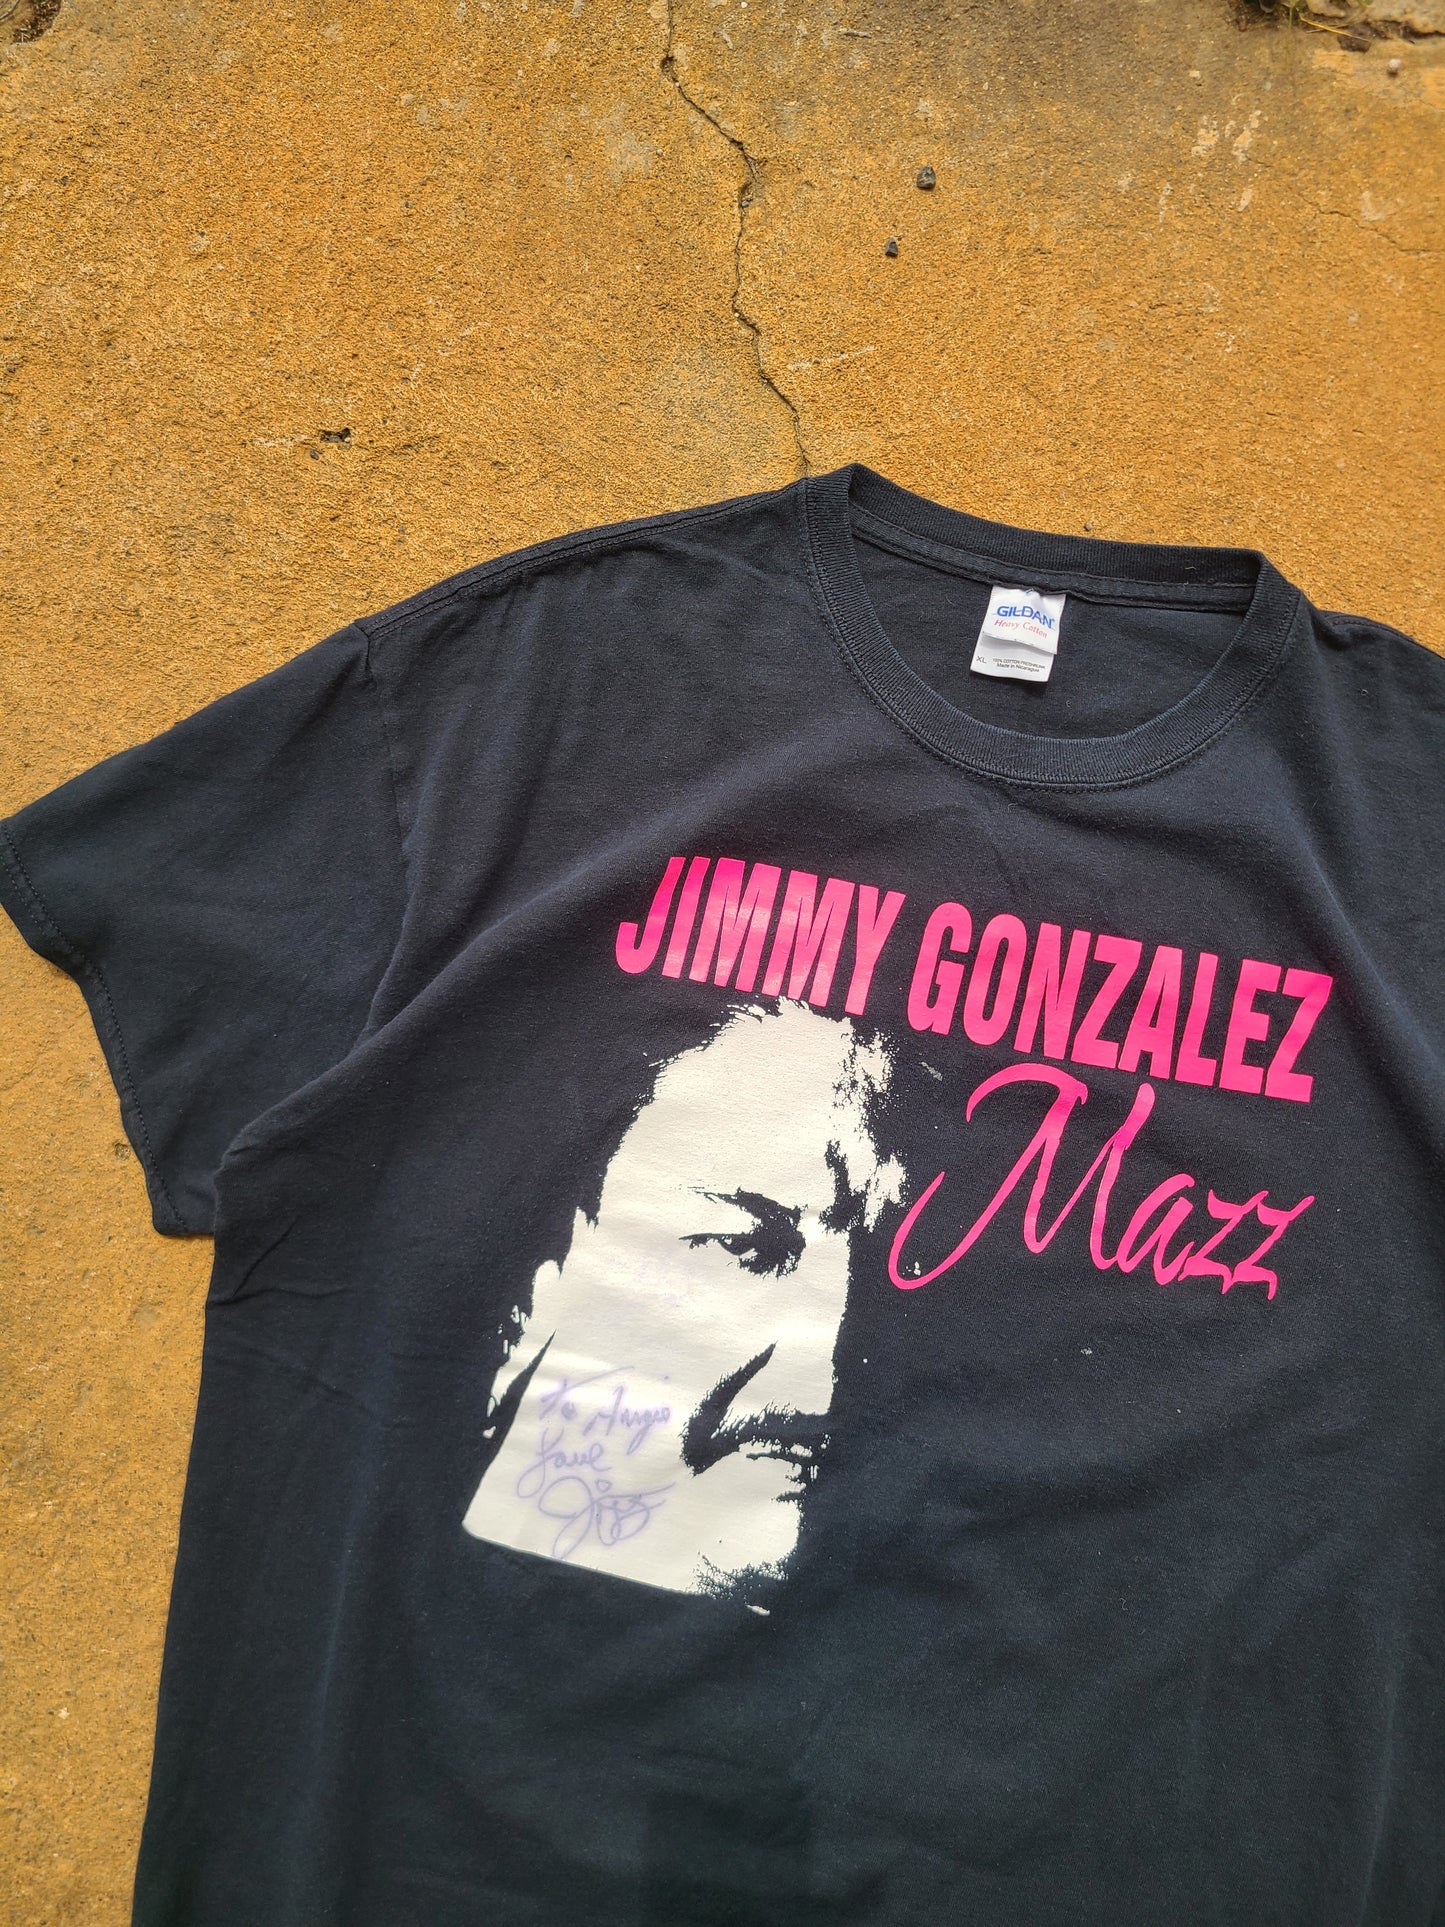 2002 Autographed Jimmy Gonzalez  Mazz Size XL